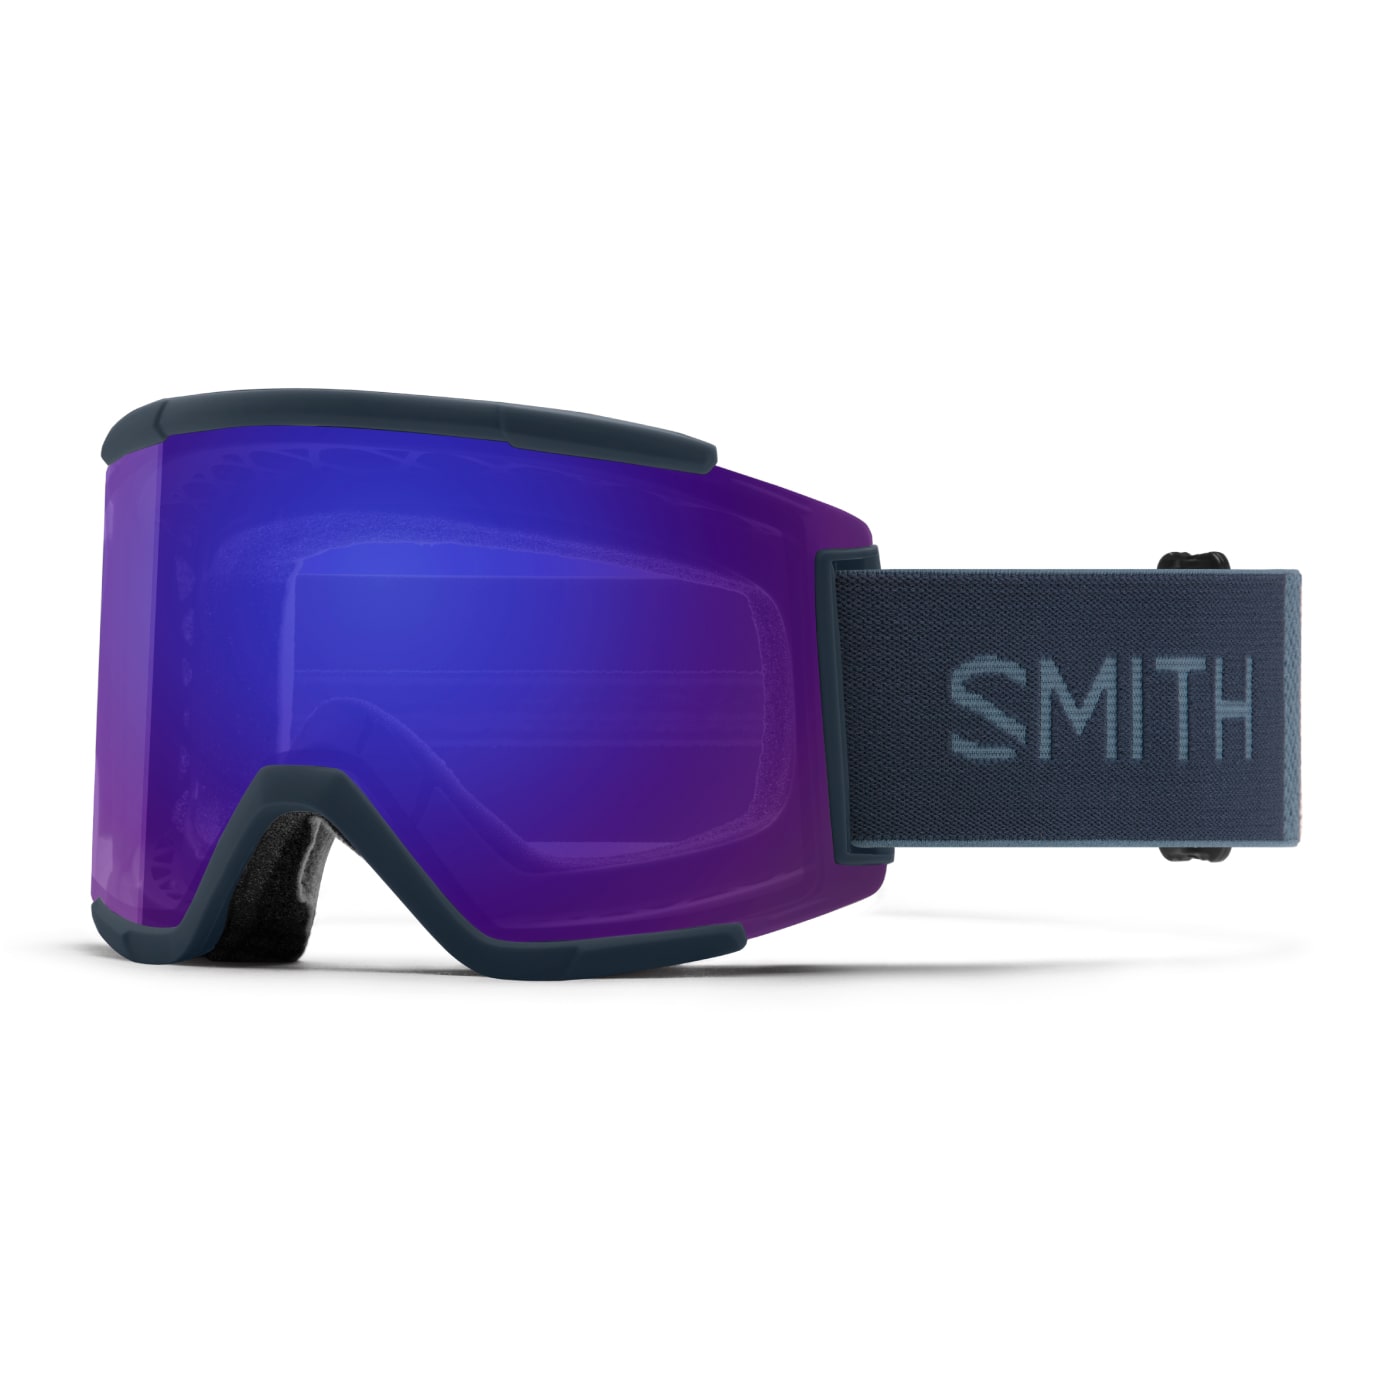 Smith Squad XL Goggles with ChromaPop Lens 2022 FRENCH NAVY/EDAY VIOLET MIR